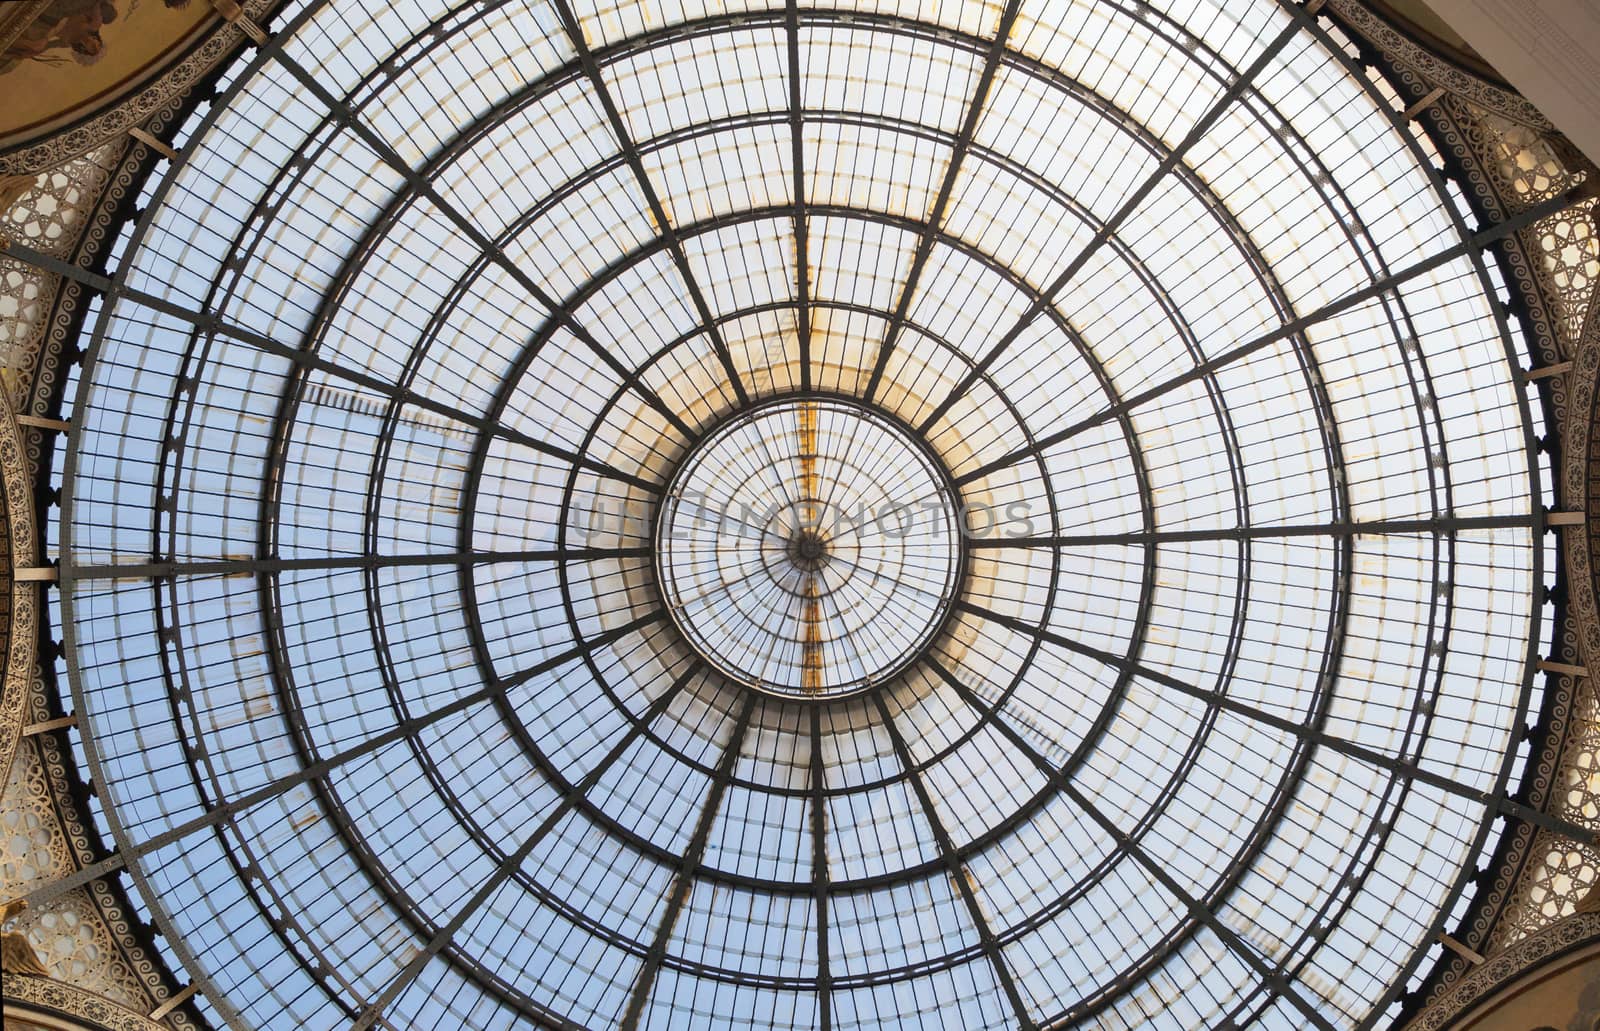 ITALY, MILAN - SEPTEMBER 27, 2014 - Ceiling of galleria Vittorio Emanuele II by Goodday